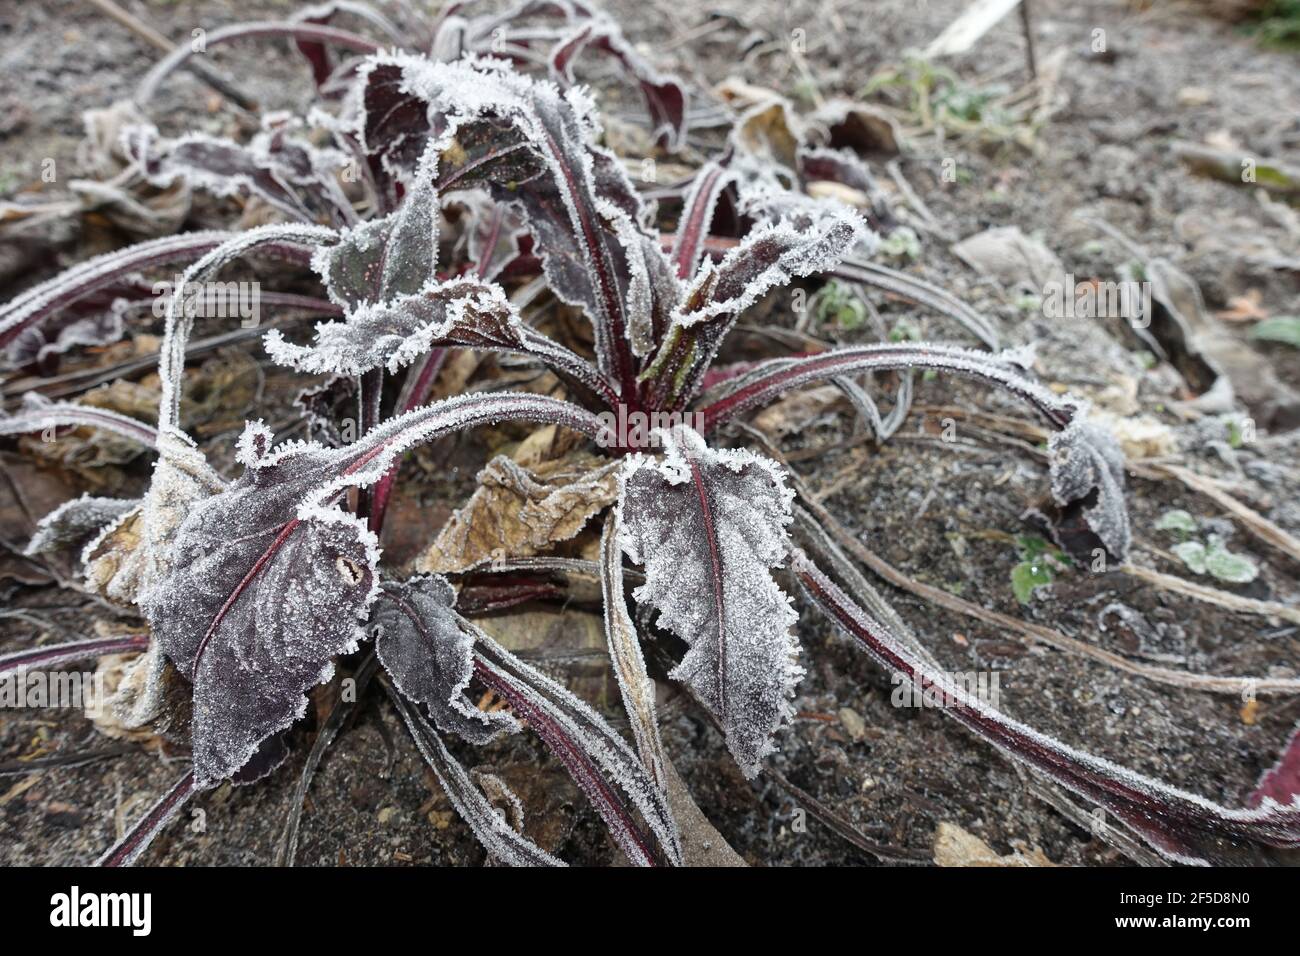 Root beet (Beta vulgaris), hoar frost on the leaves of Root beet, Germany Stock Photo